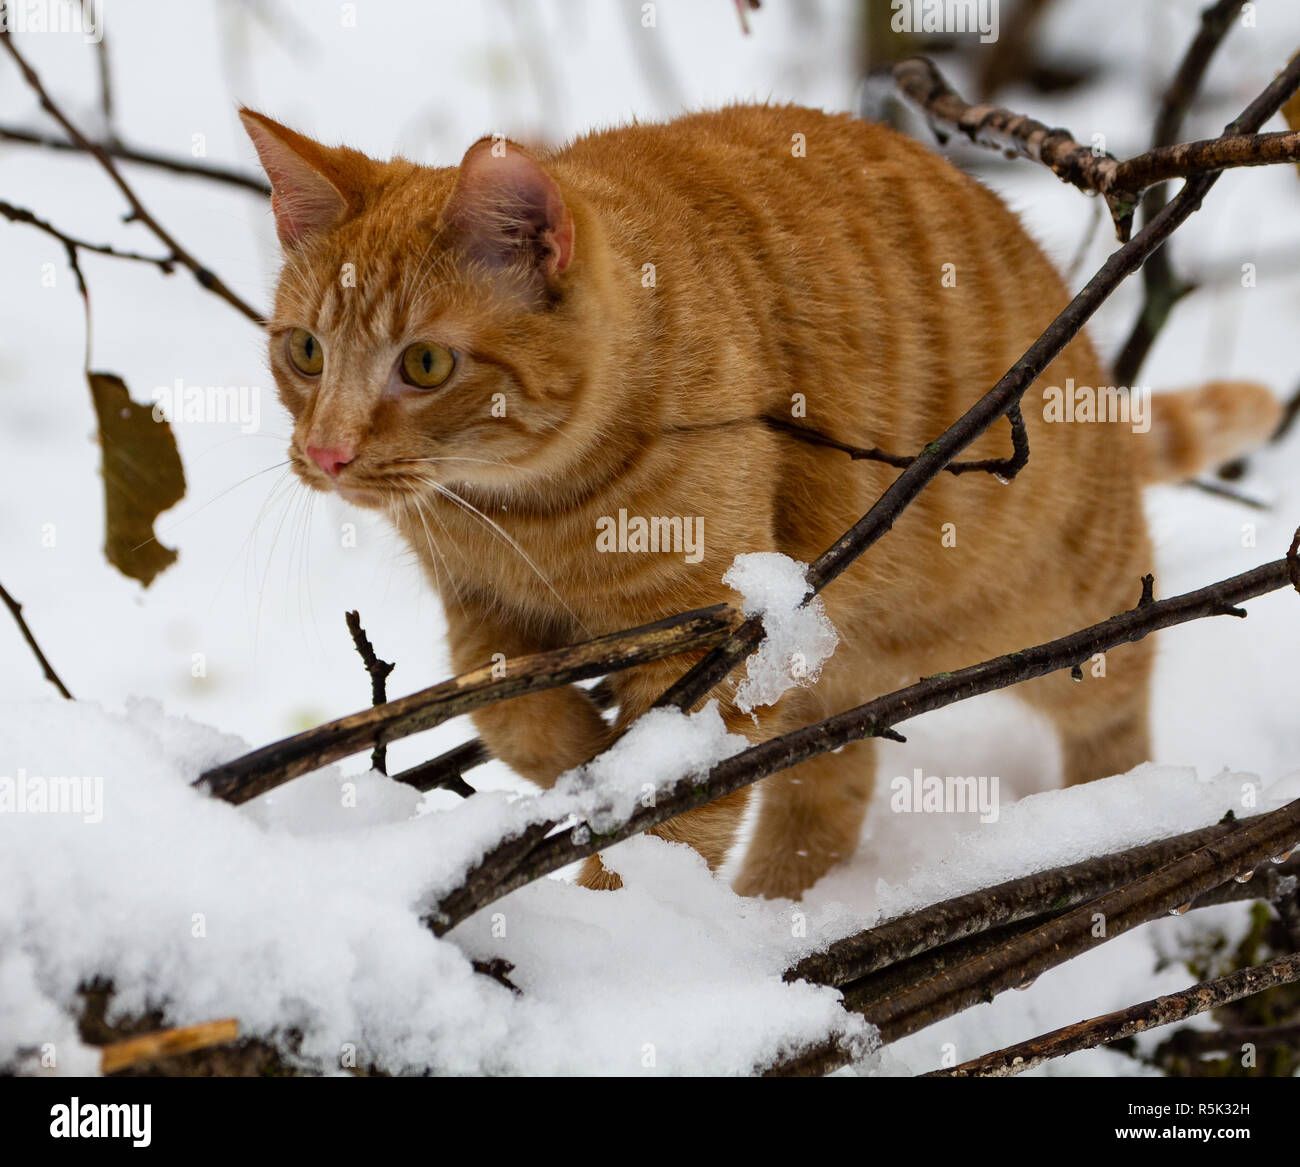 Orange tabby kitten enjoying his first snowfall adventure. Stock Photo